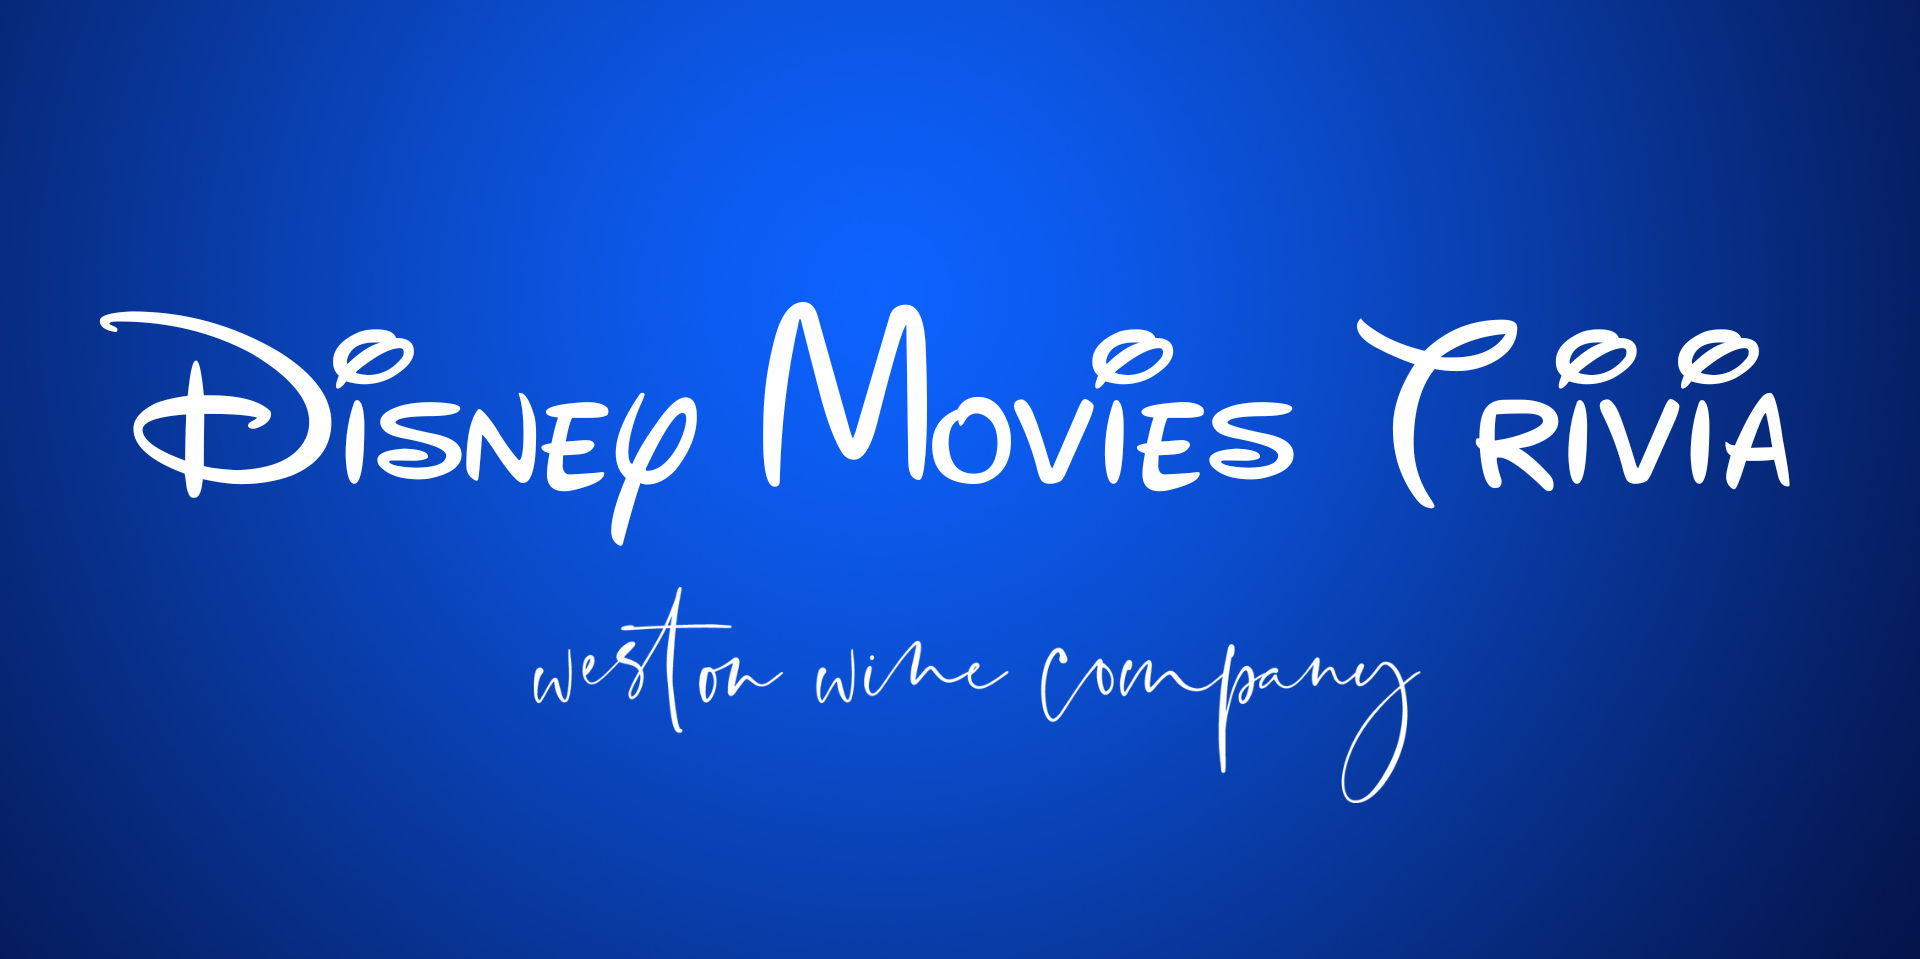 Disney Movies Trivia promotional image